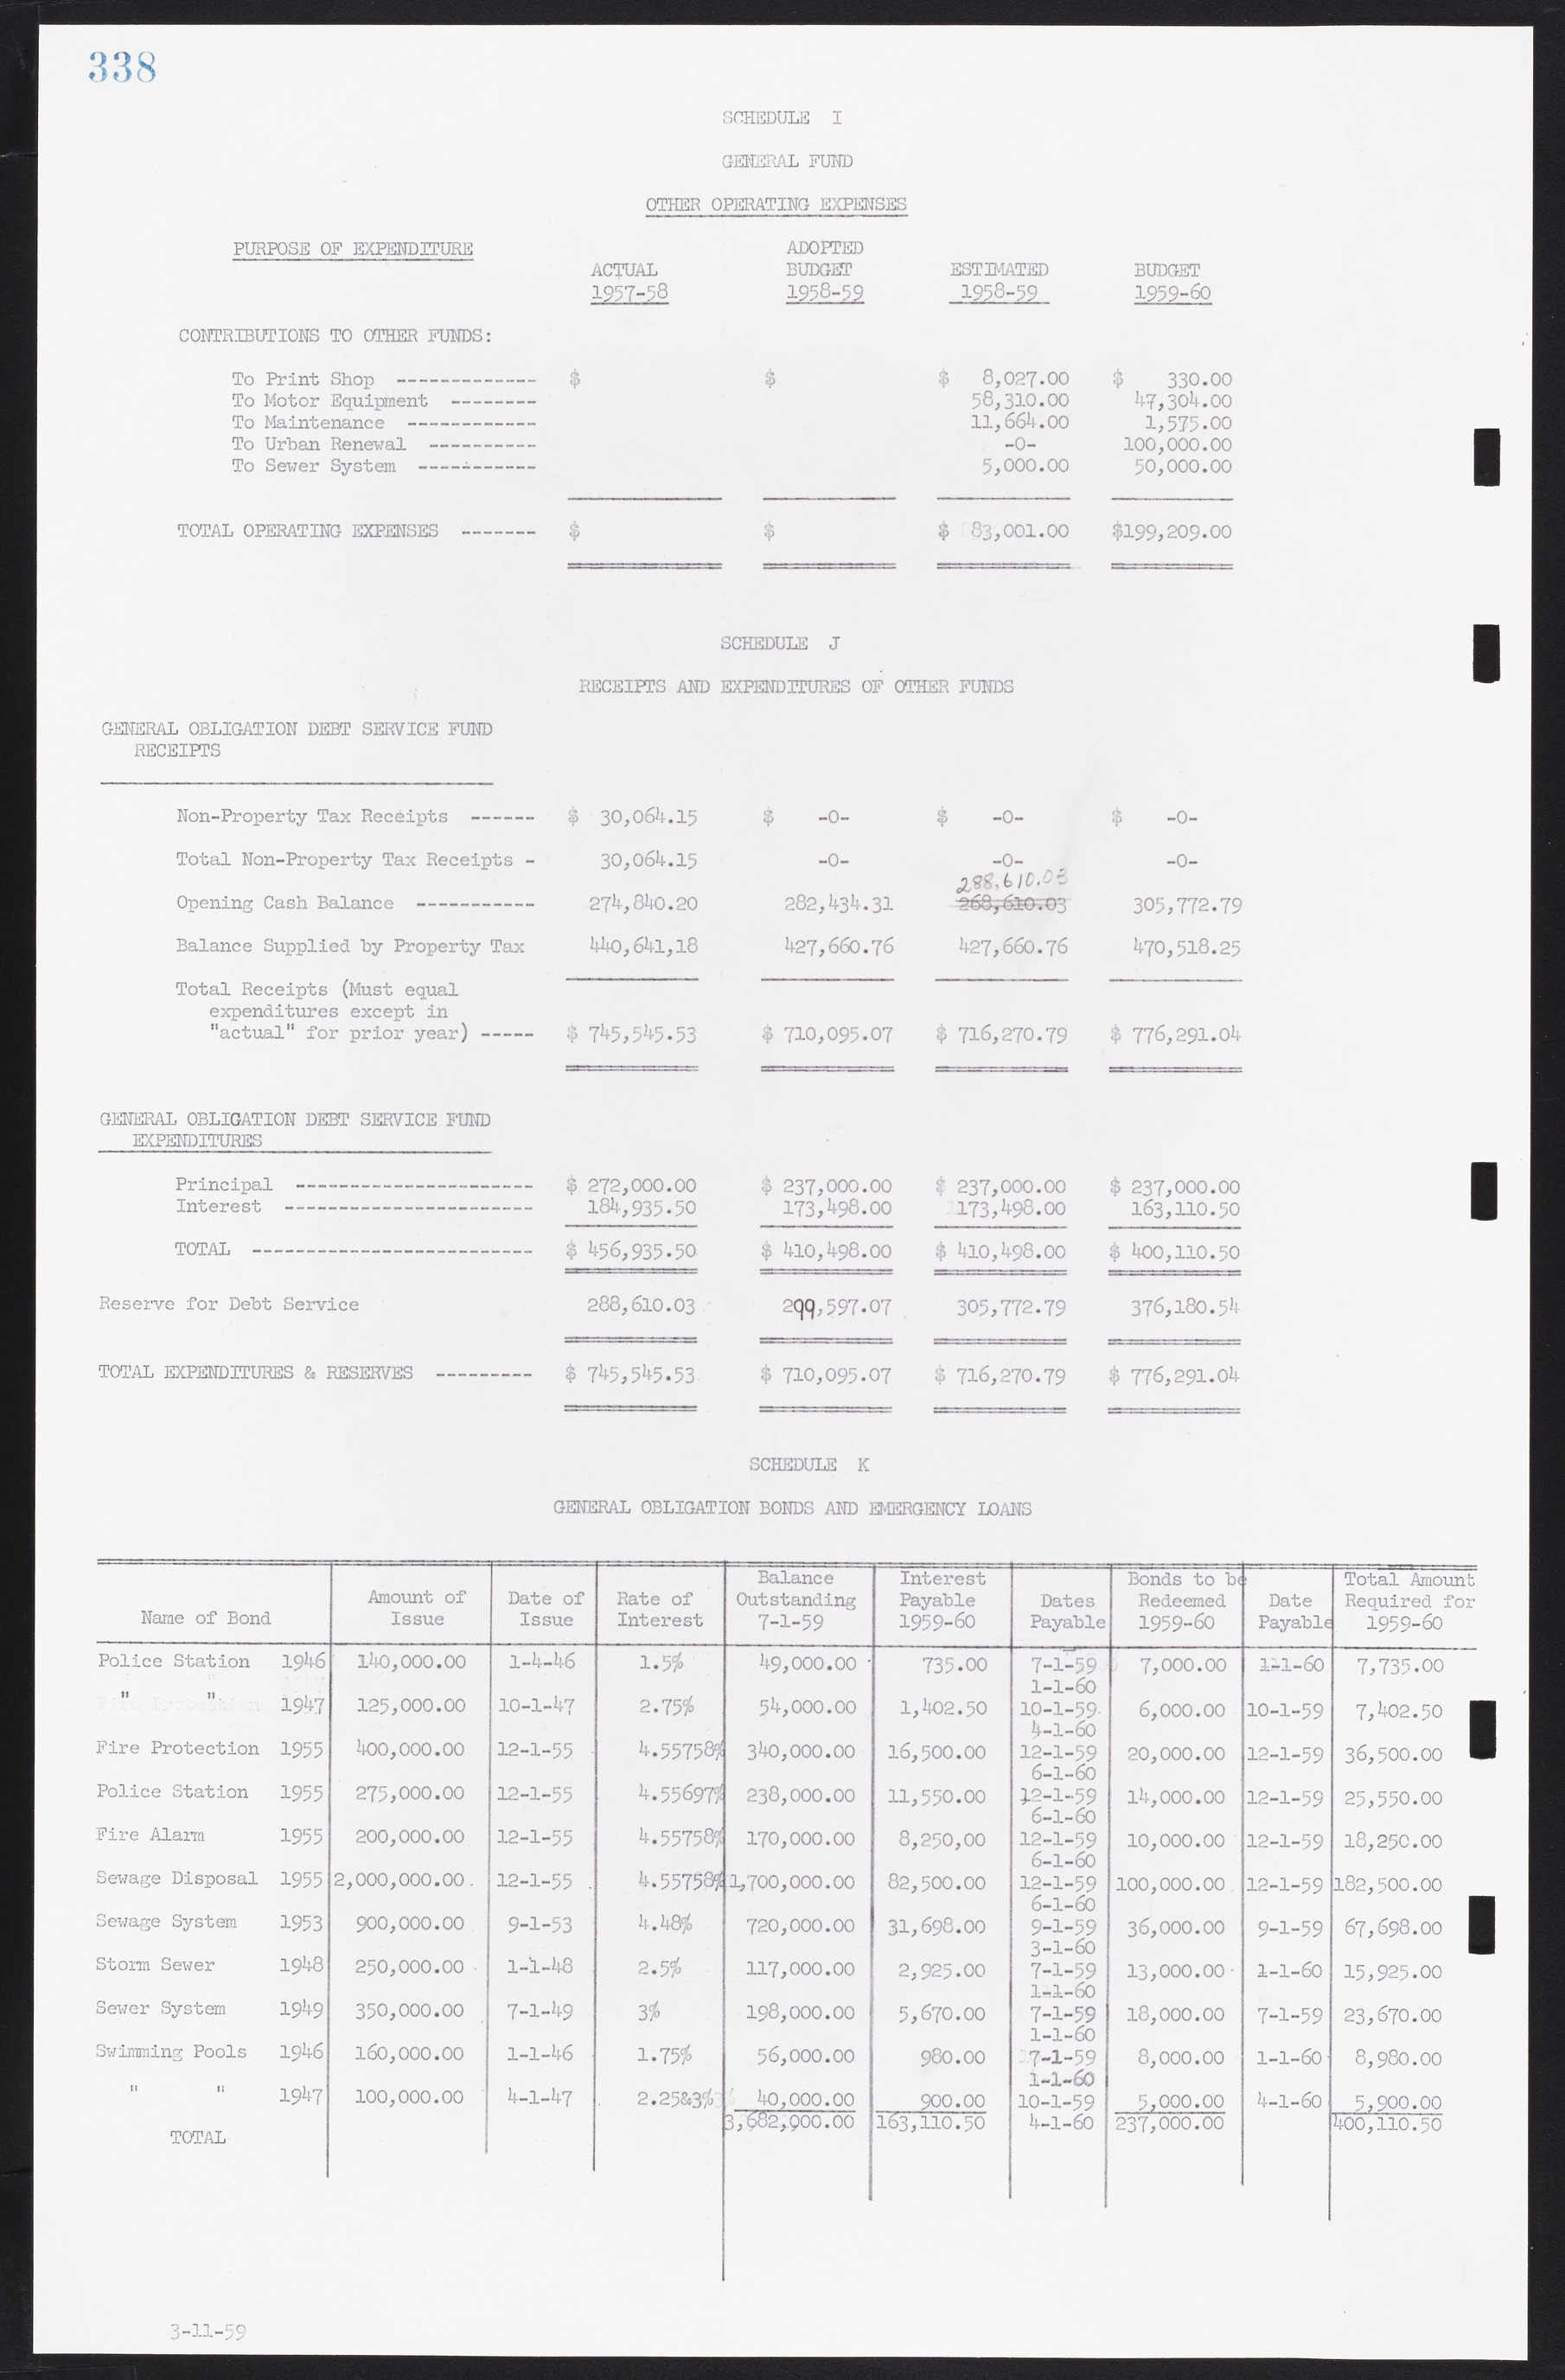 Las Vegas City Commission Minutes, November 20, 1957 to December 2, 1959, lvc000011-346